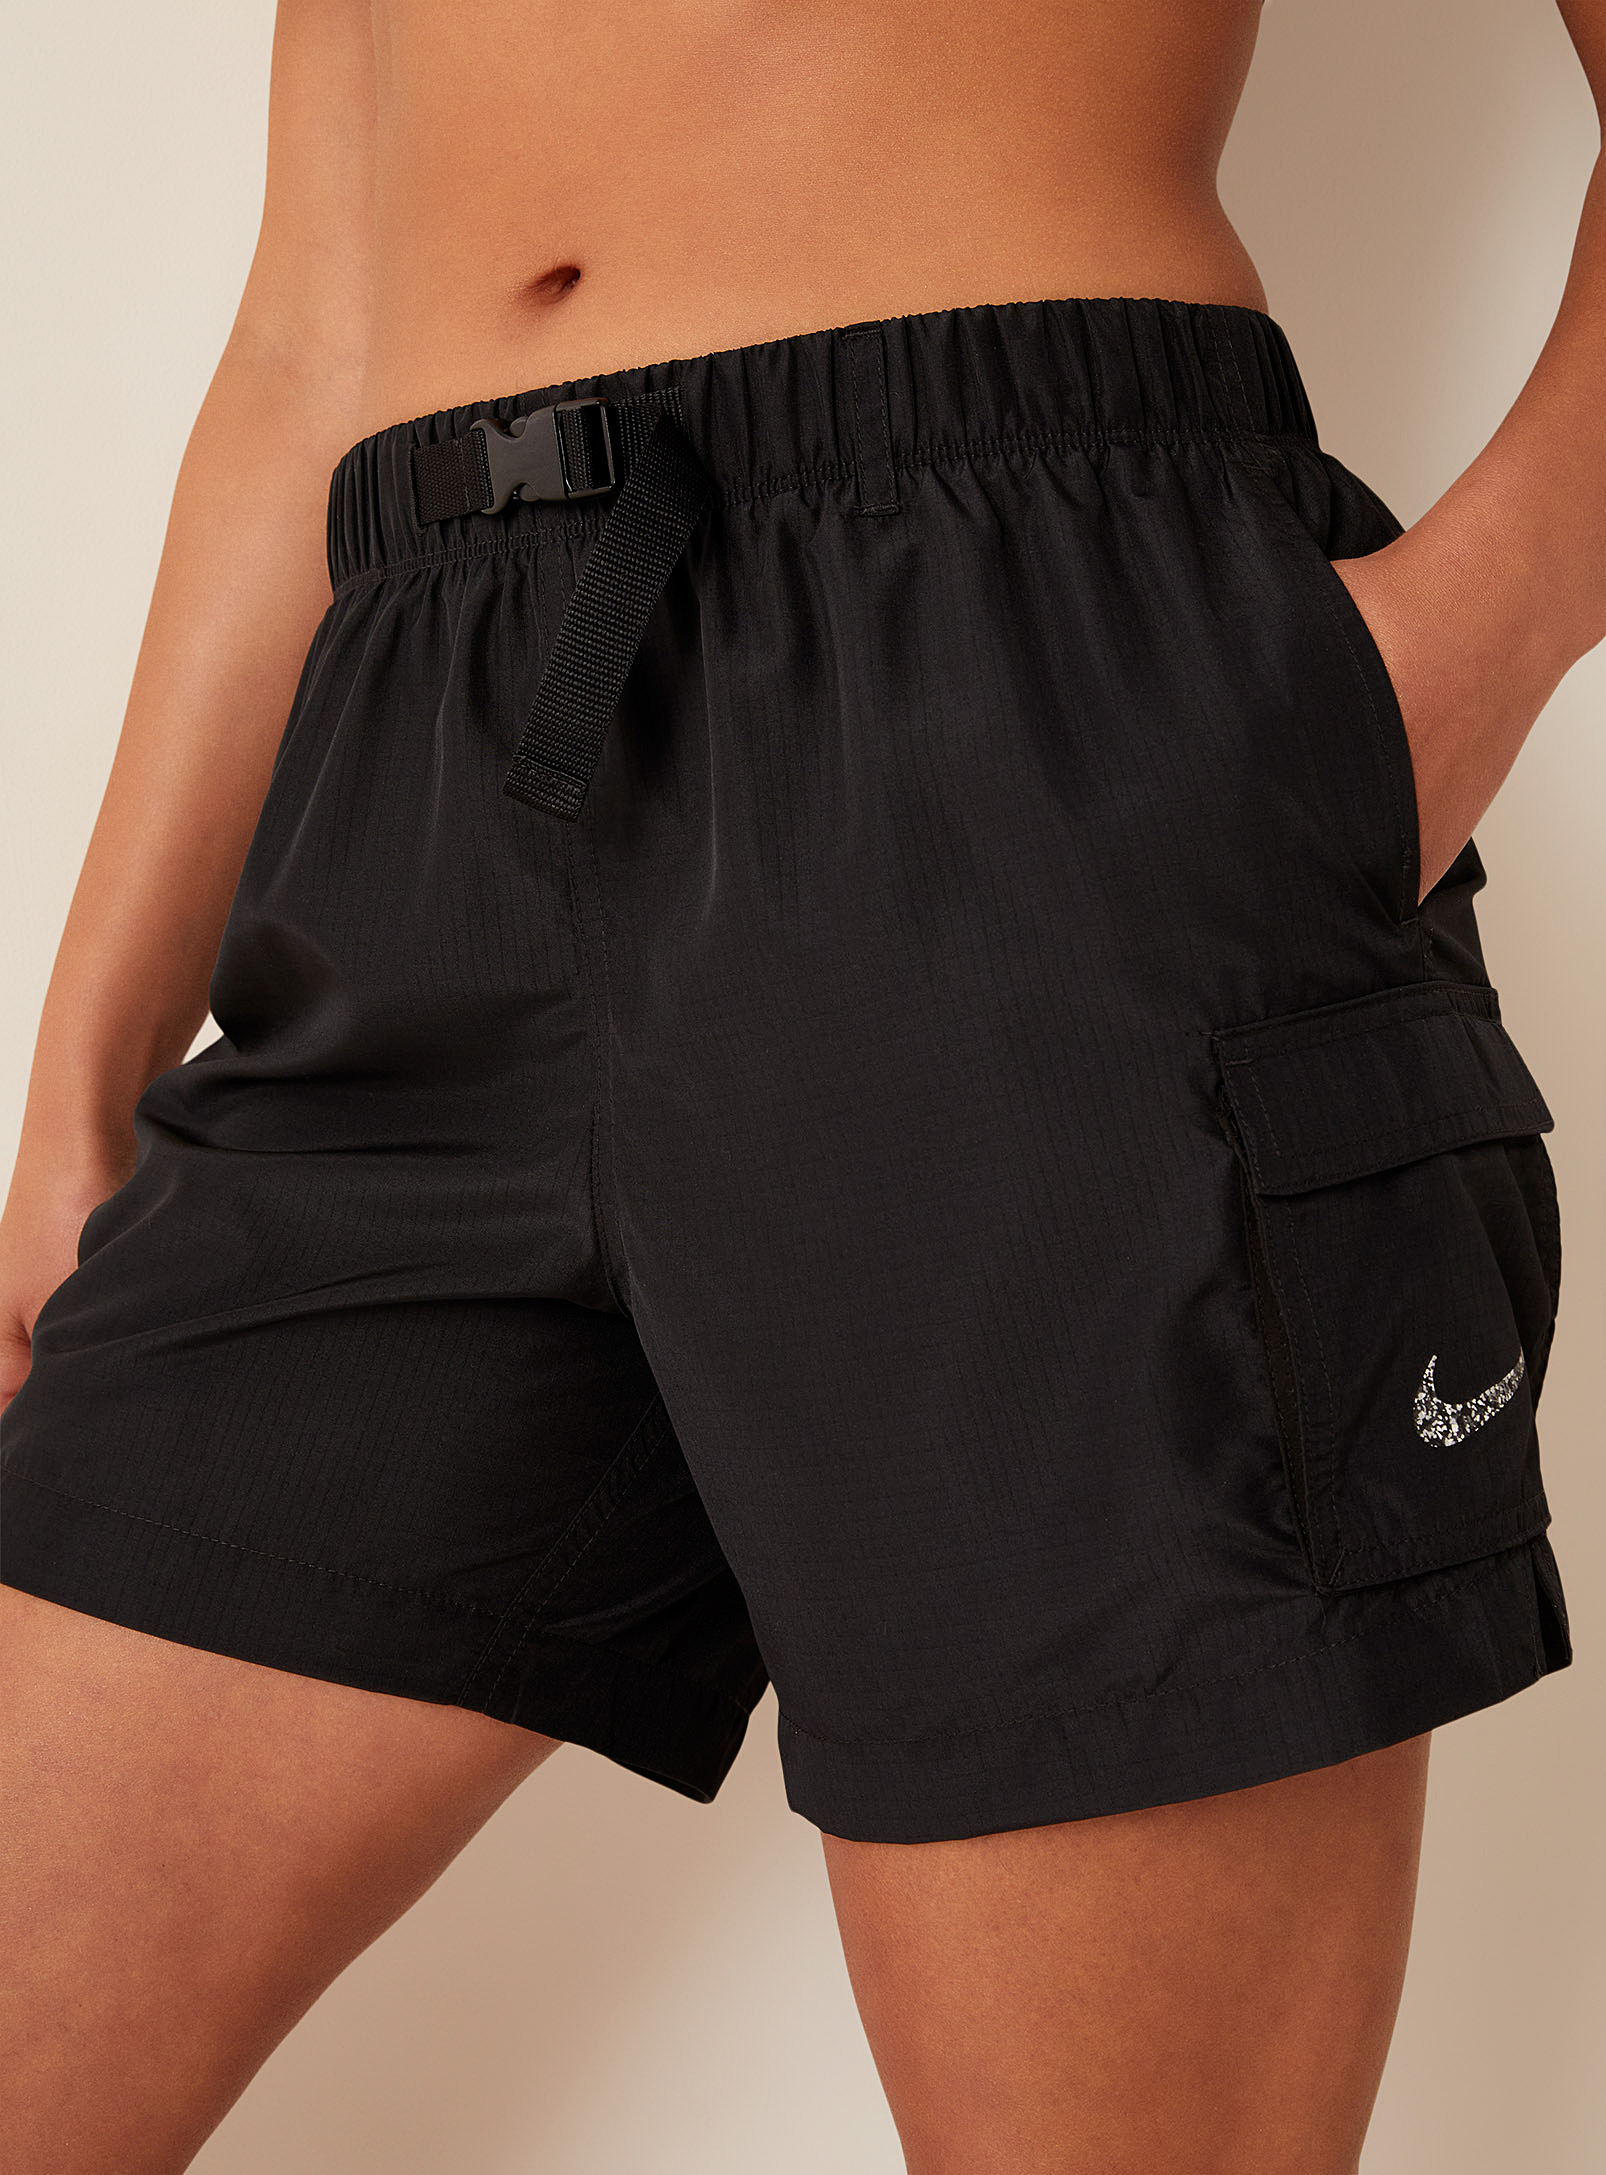 Nike - Le short de plage ripstop poche cargo